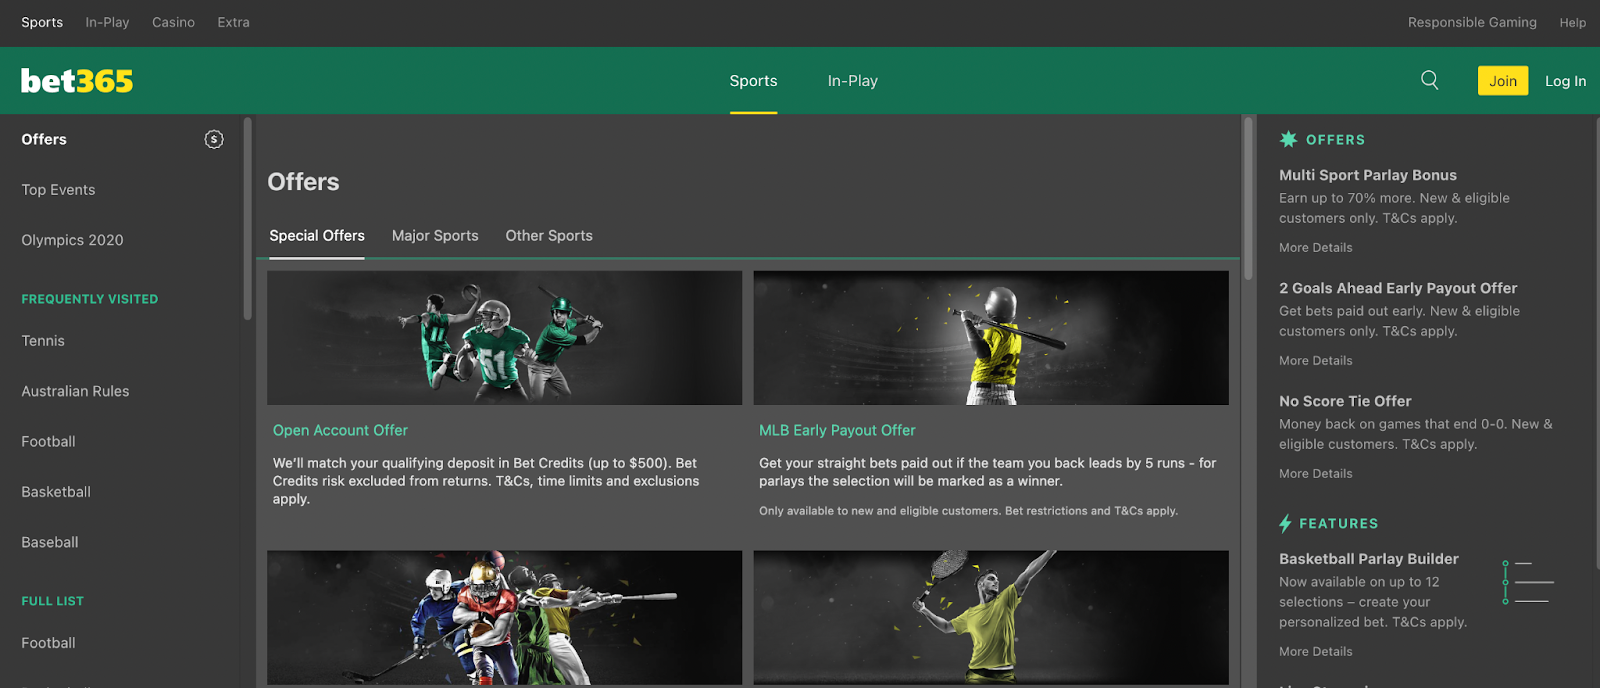 bet365 Sportsbook - Homepage Signup 